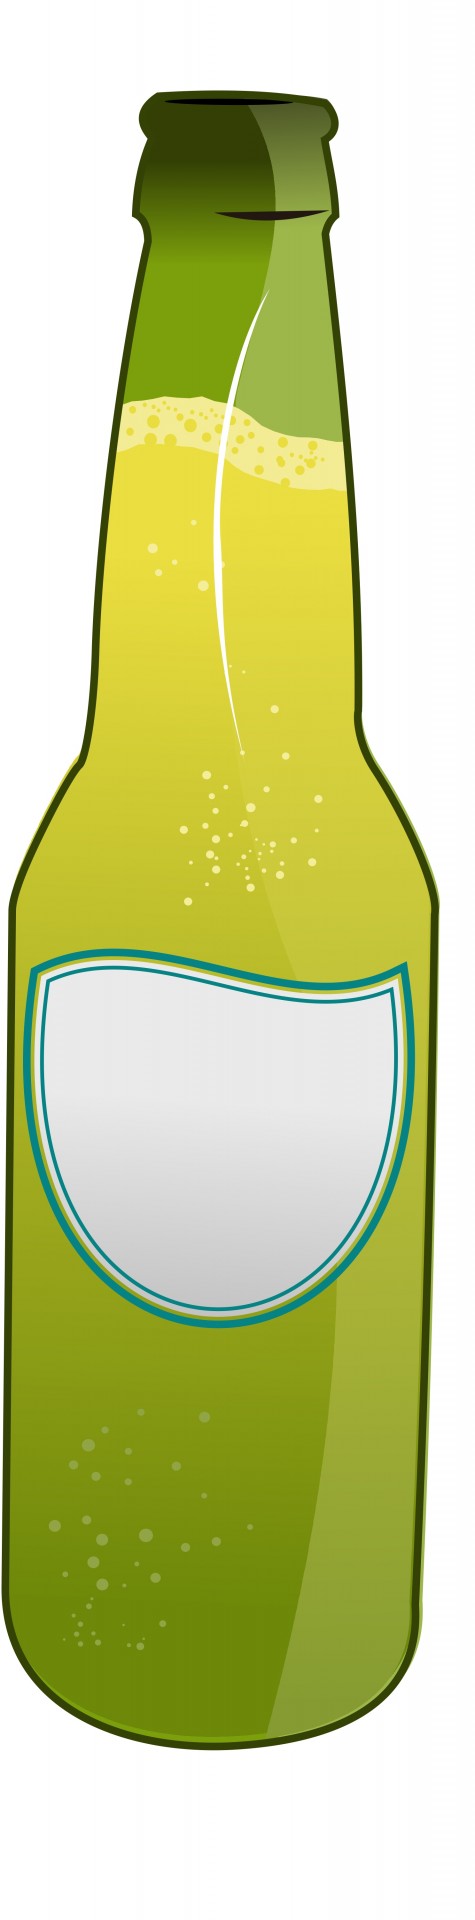 bottle with sparkling lemon juice